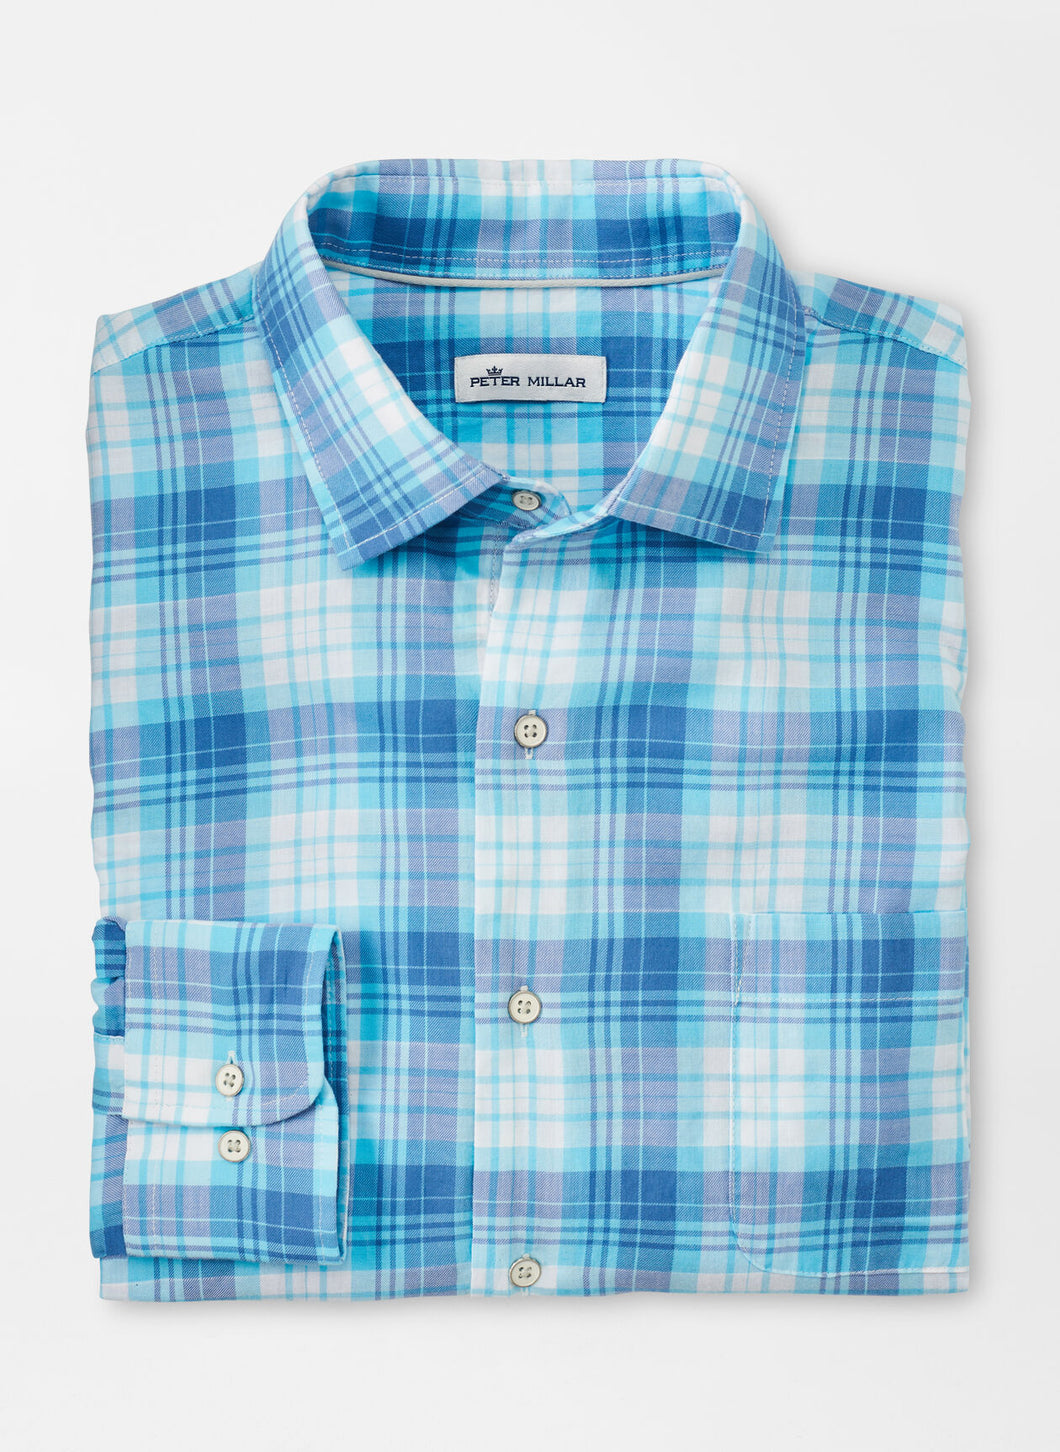 Peter Millar Emerald Bay Cotton Sport Shirt in Island Blue